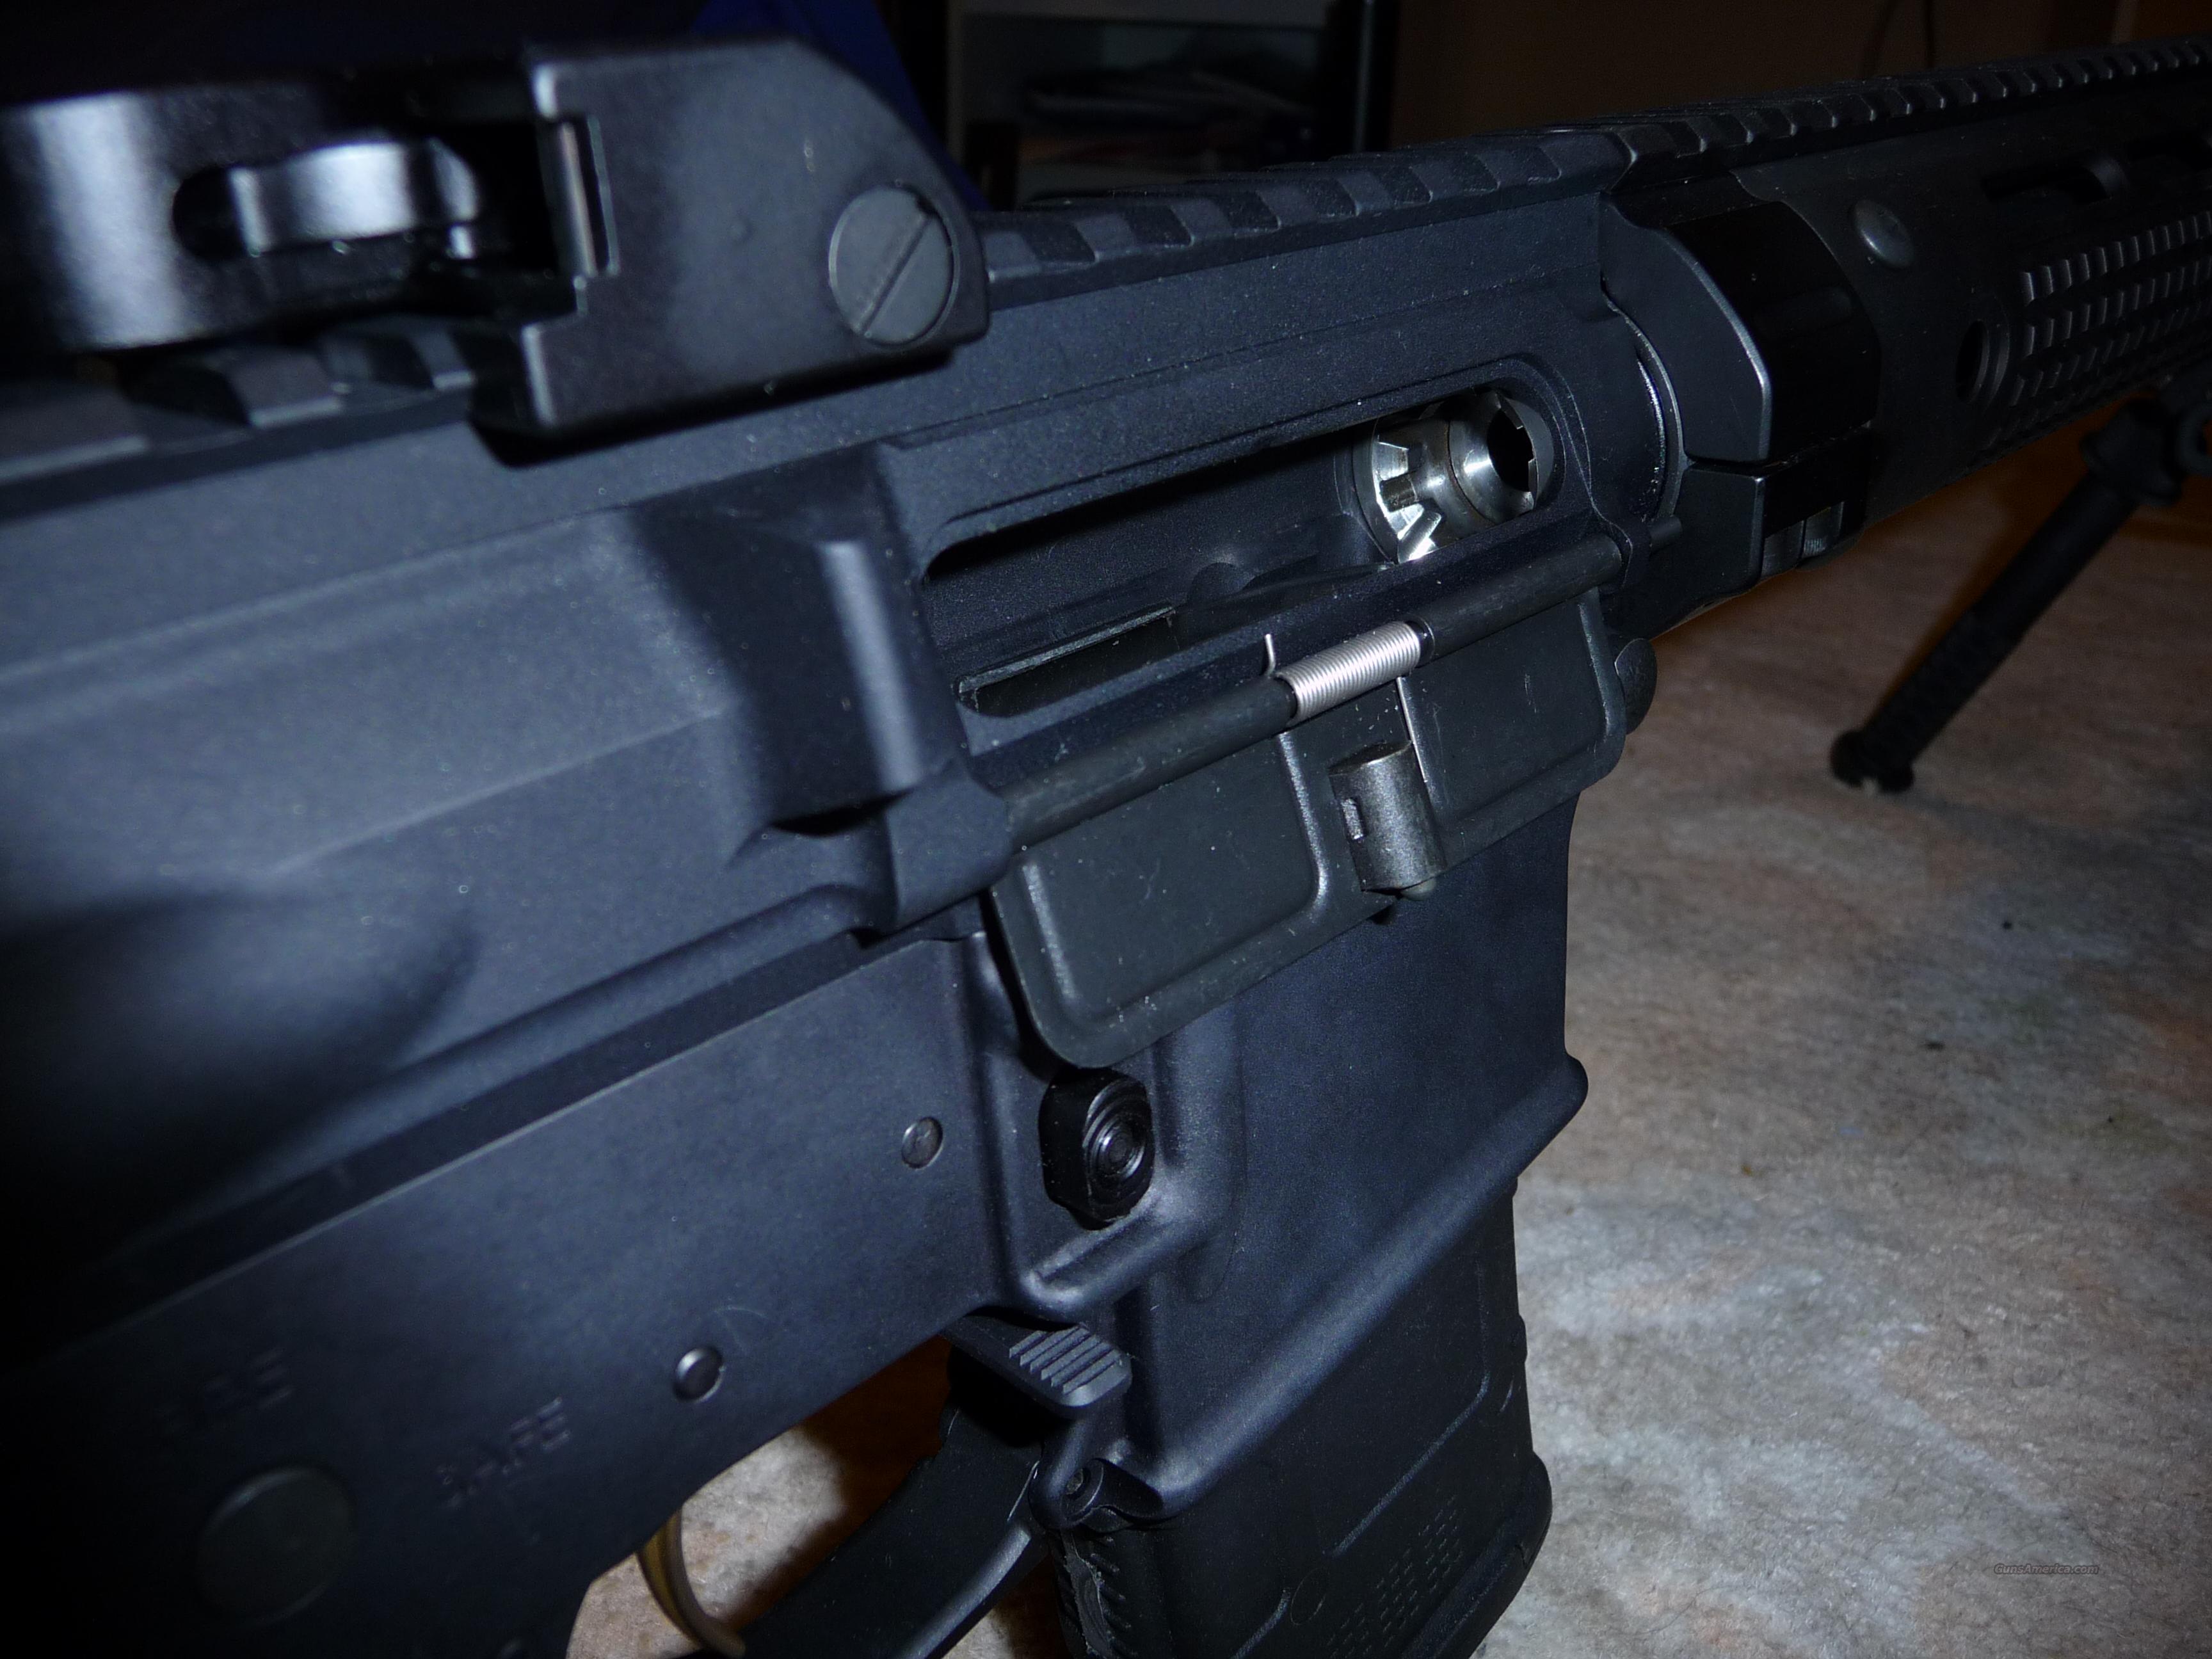 Benchrest AR-15. RRA Lower, Rainier... for sale at Gunsamerica.com ...